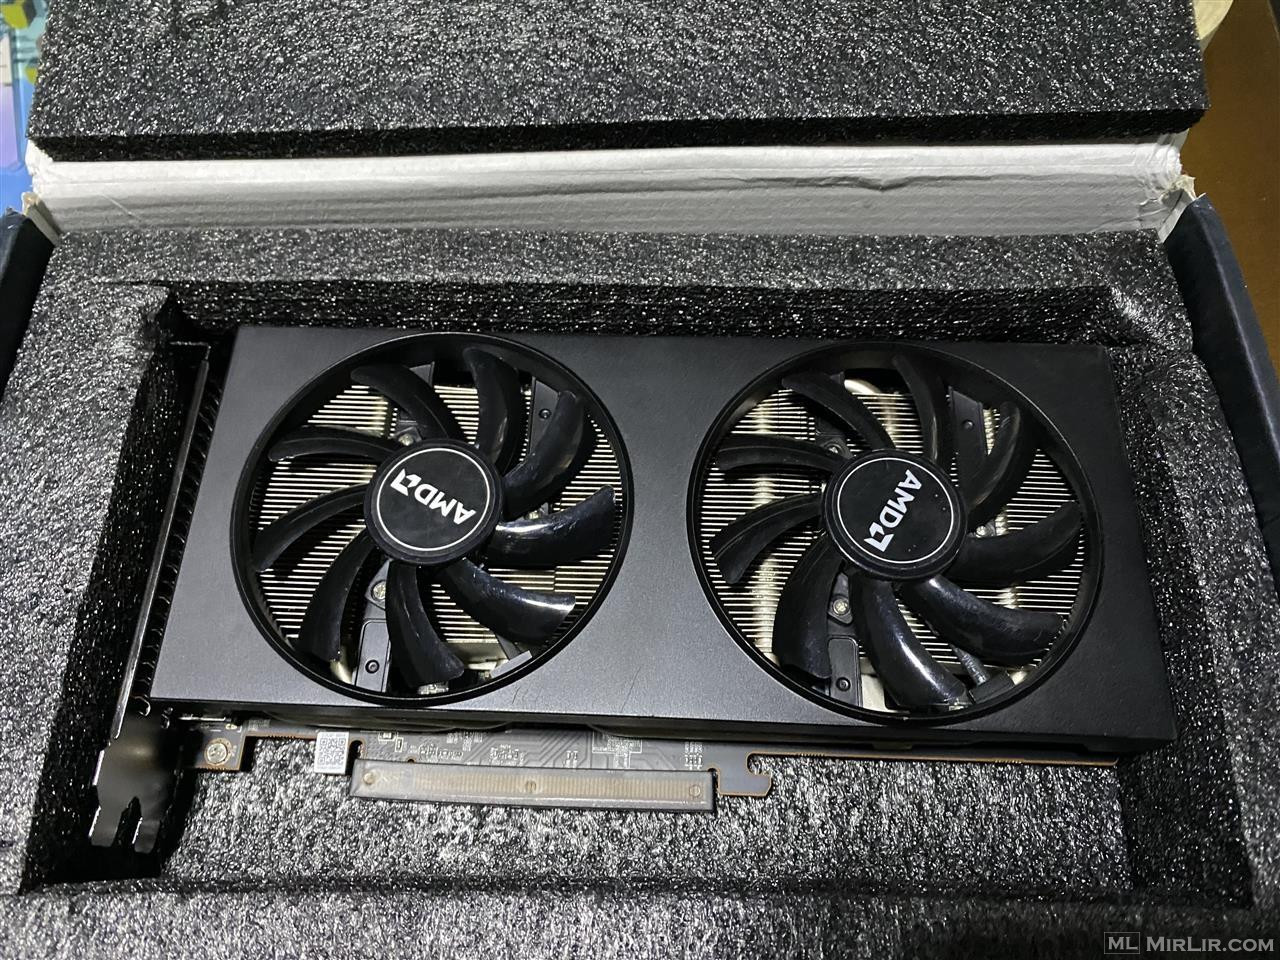 AMD RX 5700 8GB Powercolor